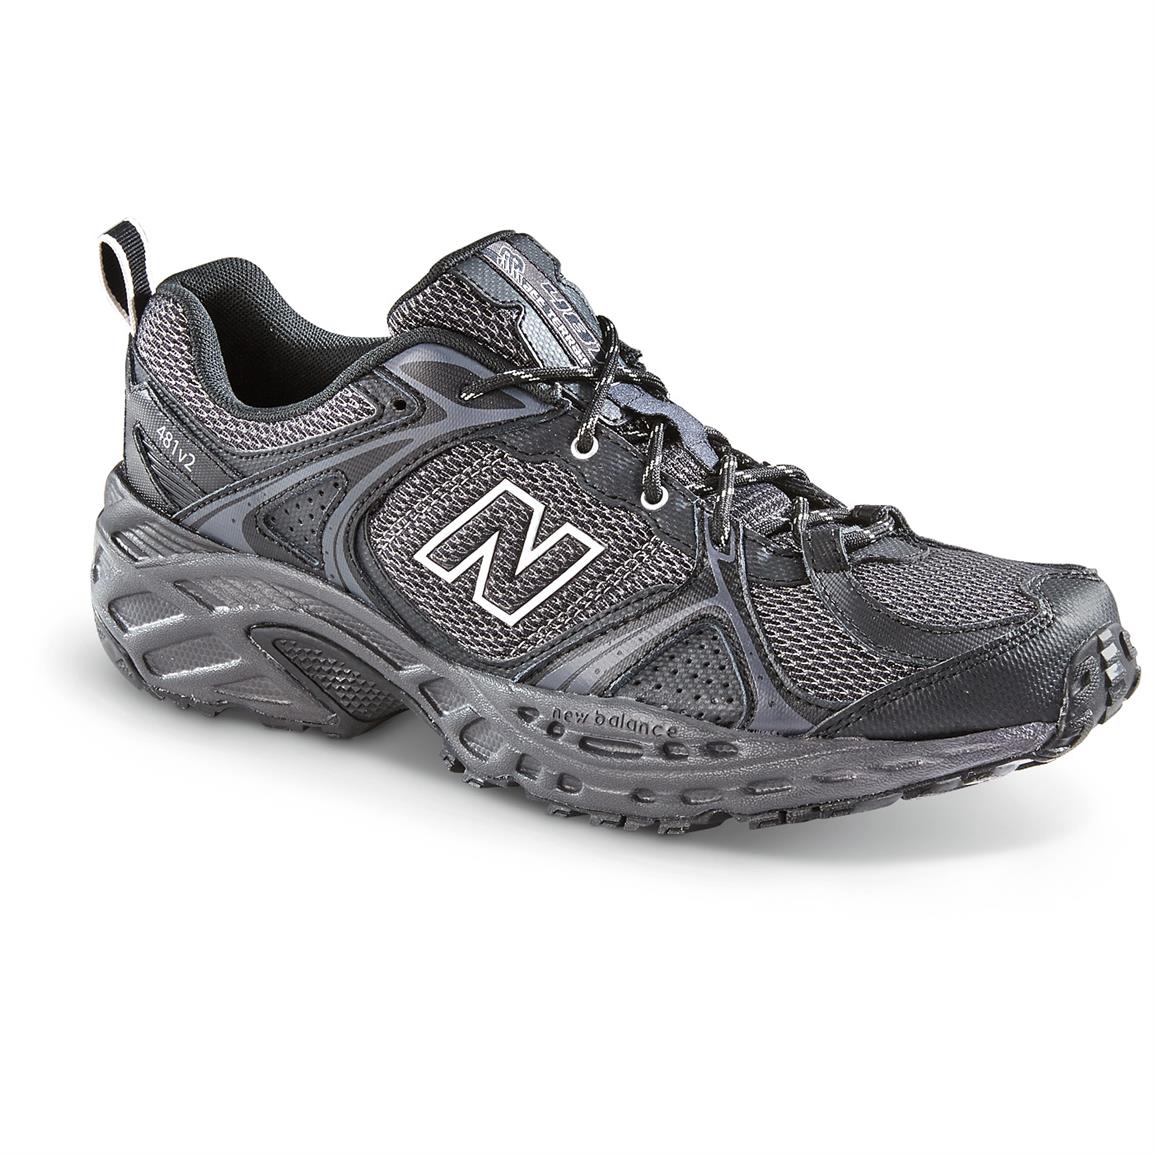 New Balance Men's MT481 V2 Trail Running Shoes - 653955, Running Shoes ...